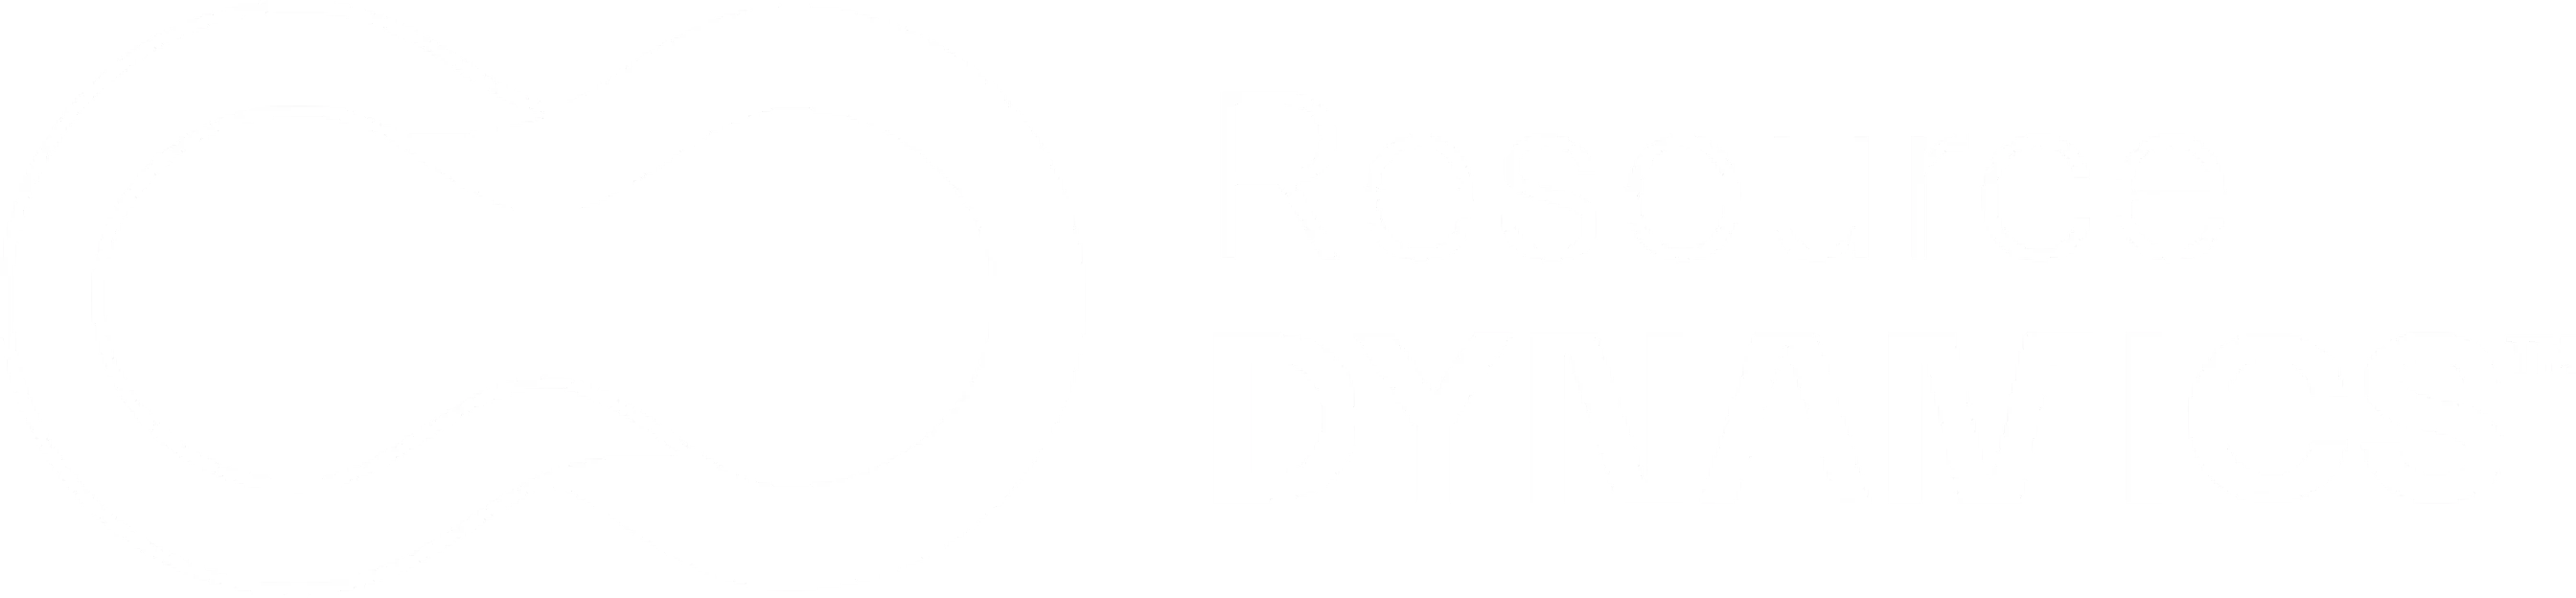 Resource Dynamics logo